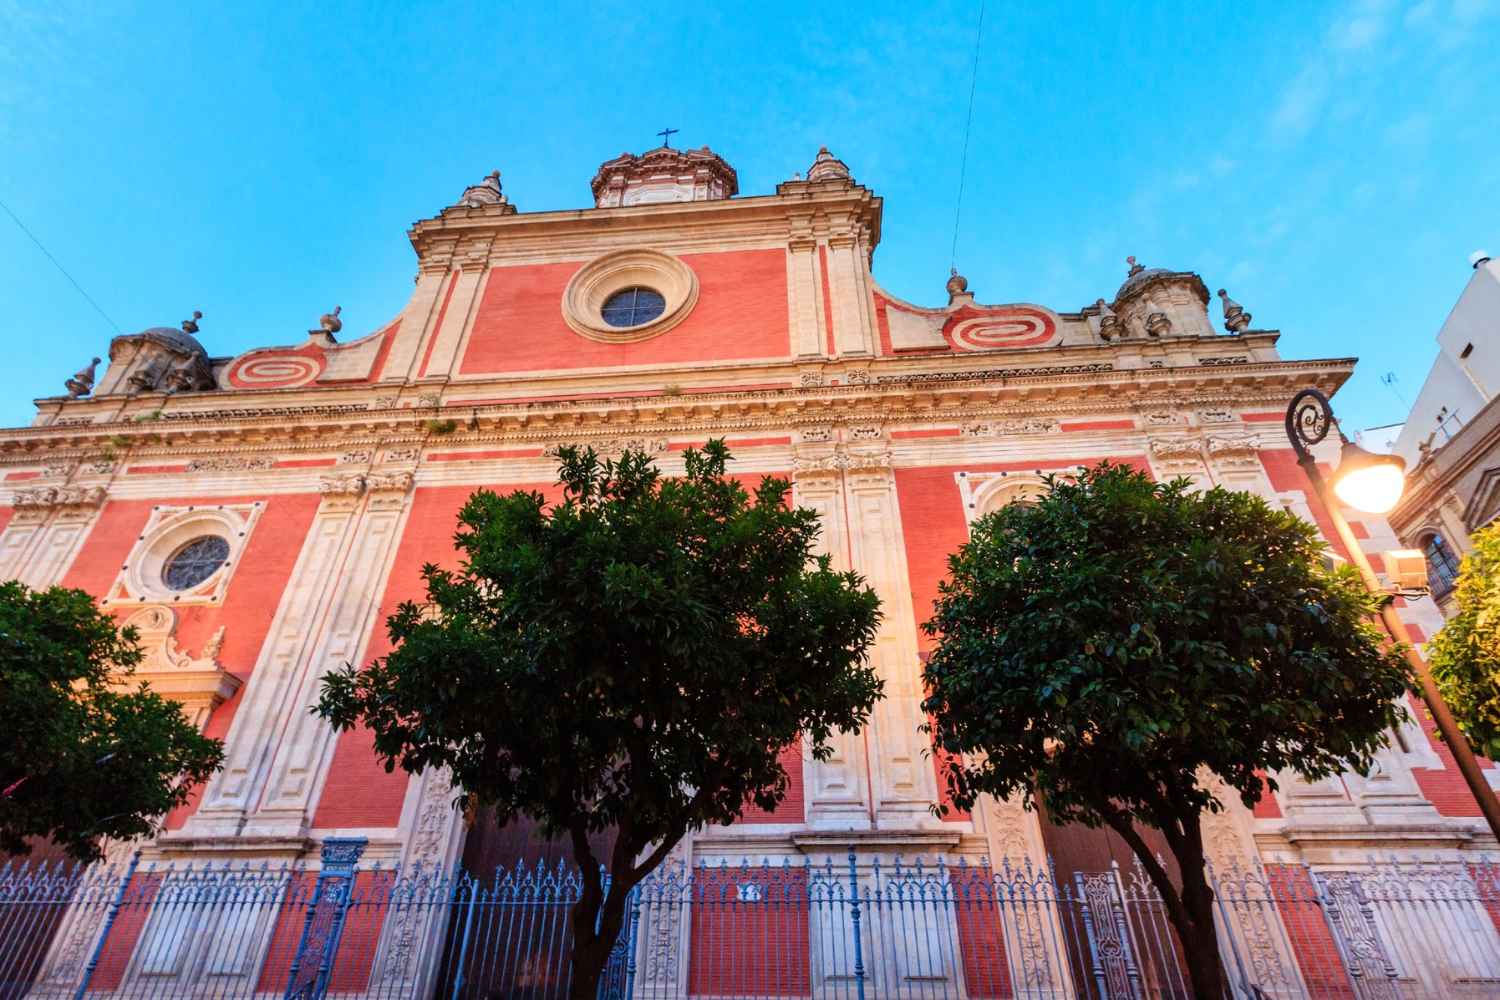 exterior-of-coral-iglesia-del-divino-salvador-church-4-days-in-seville-itinerary